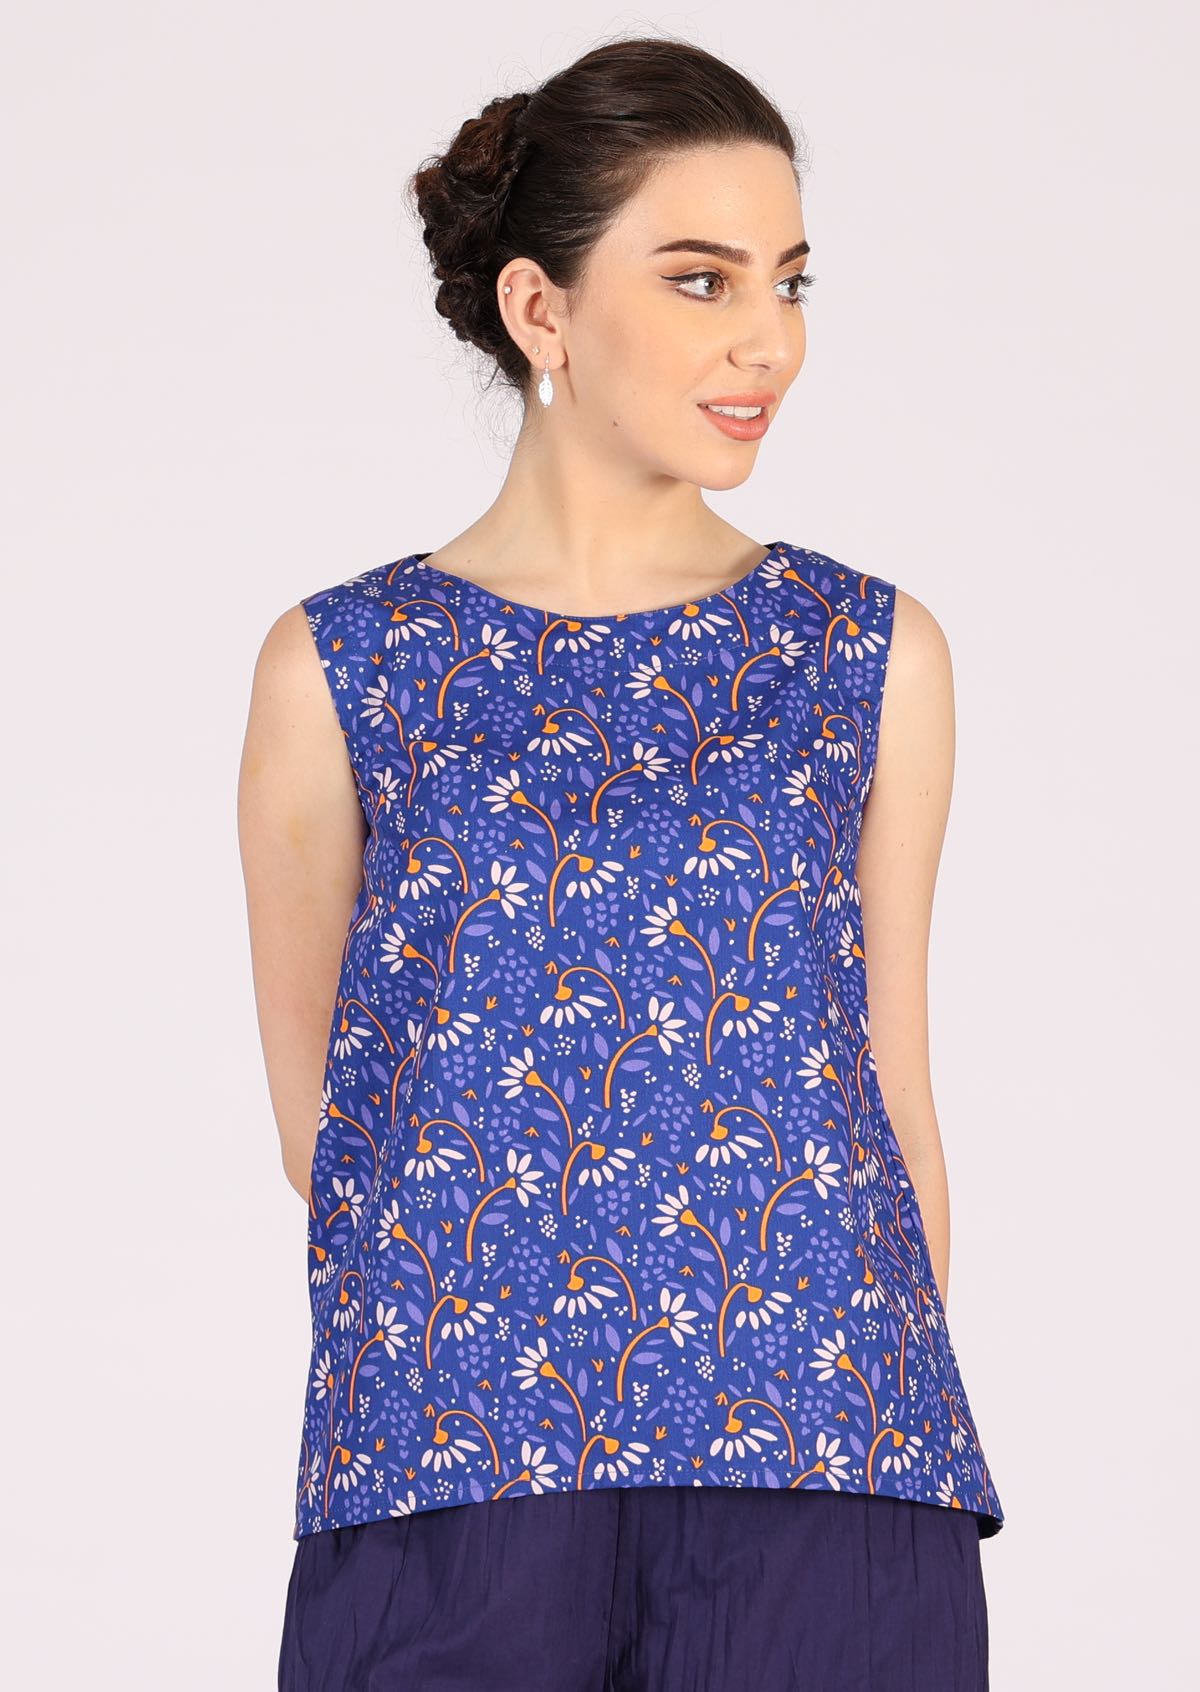 Model wears sleeveless cotton daisy print top